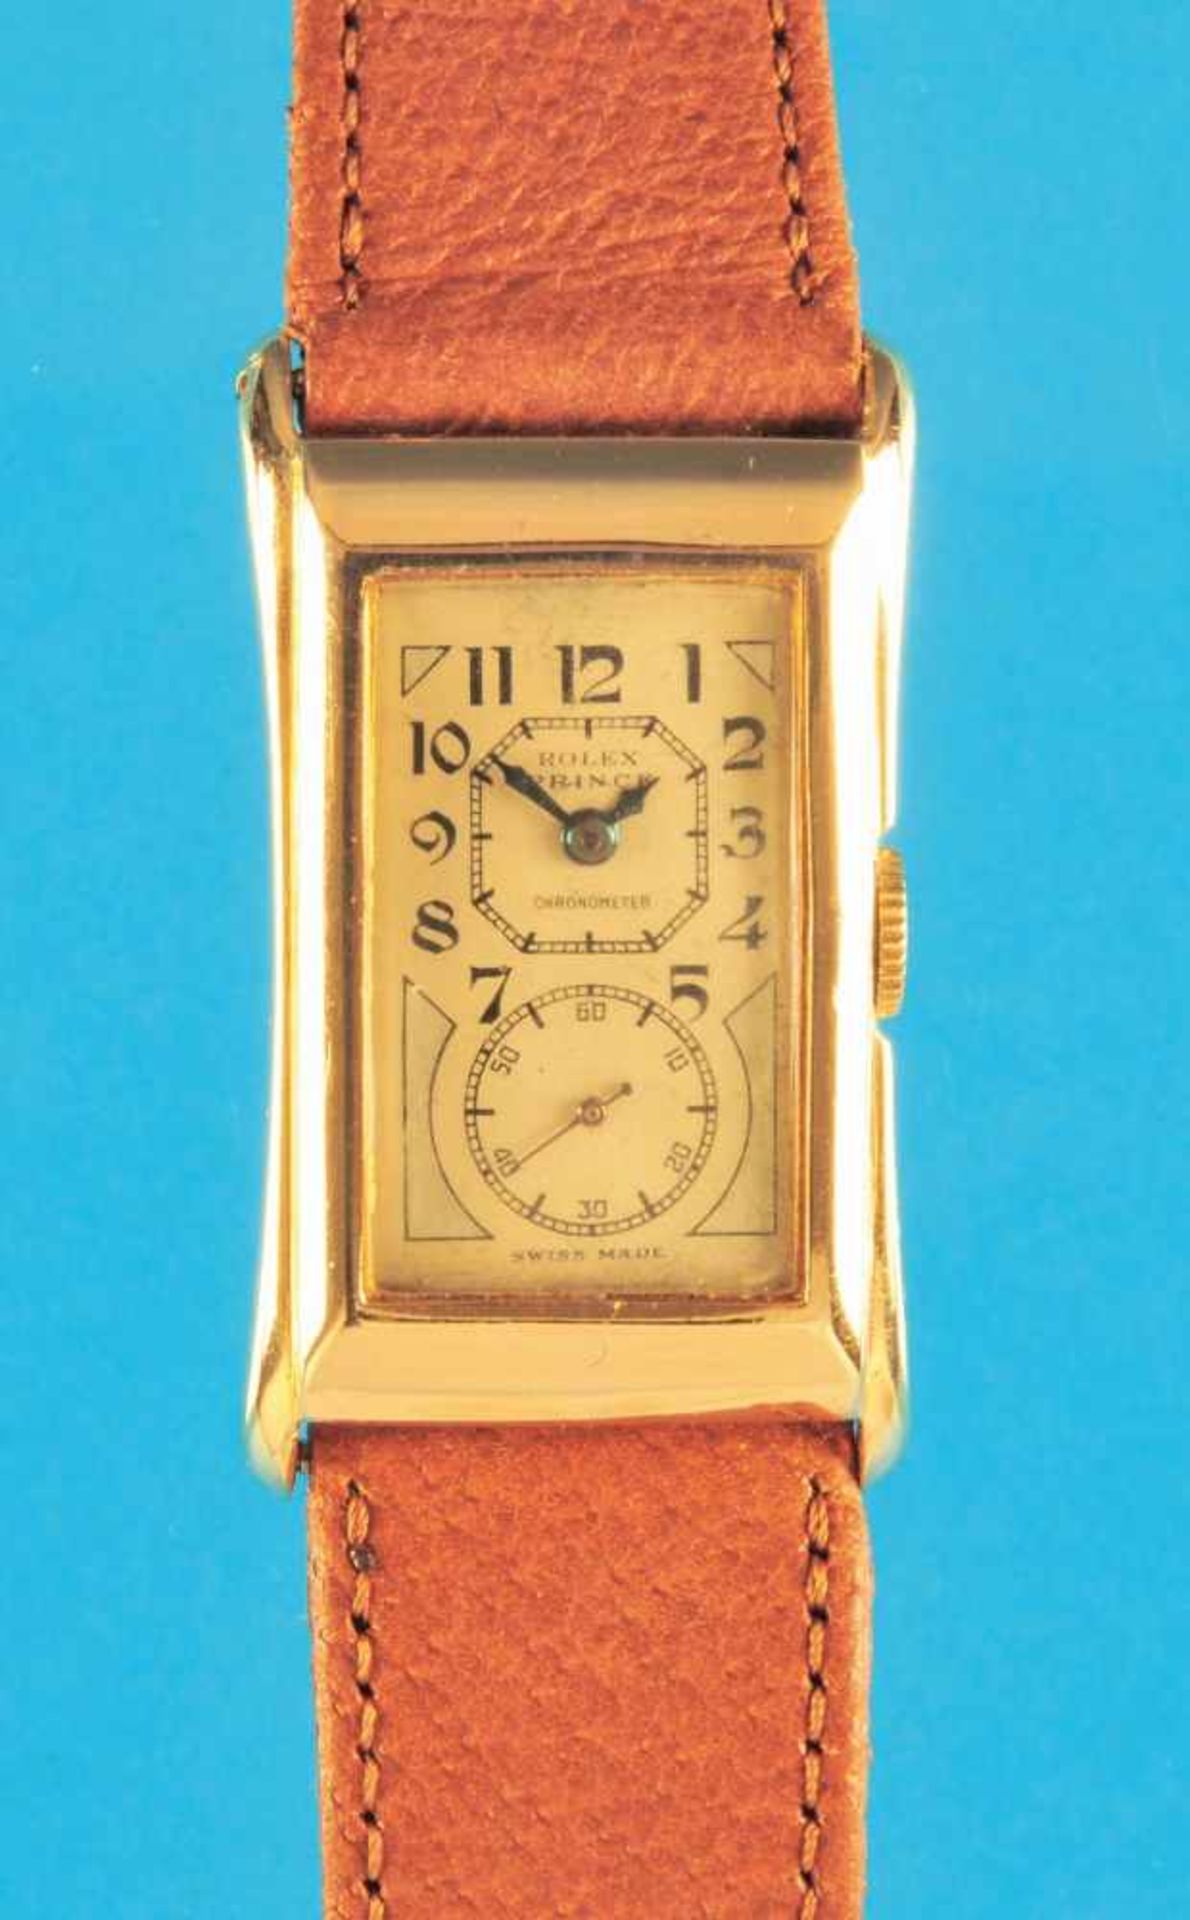 Rechteckige Goldarmbanduhr, Rolex Prince Brancard - Observatory Chronometer- Armbanduhr um 1945,